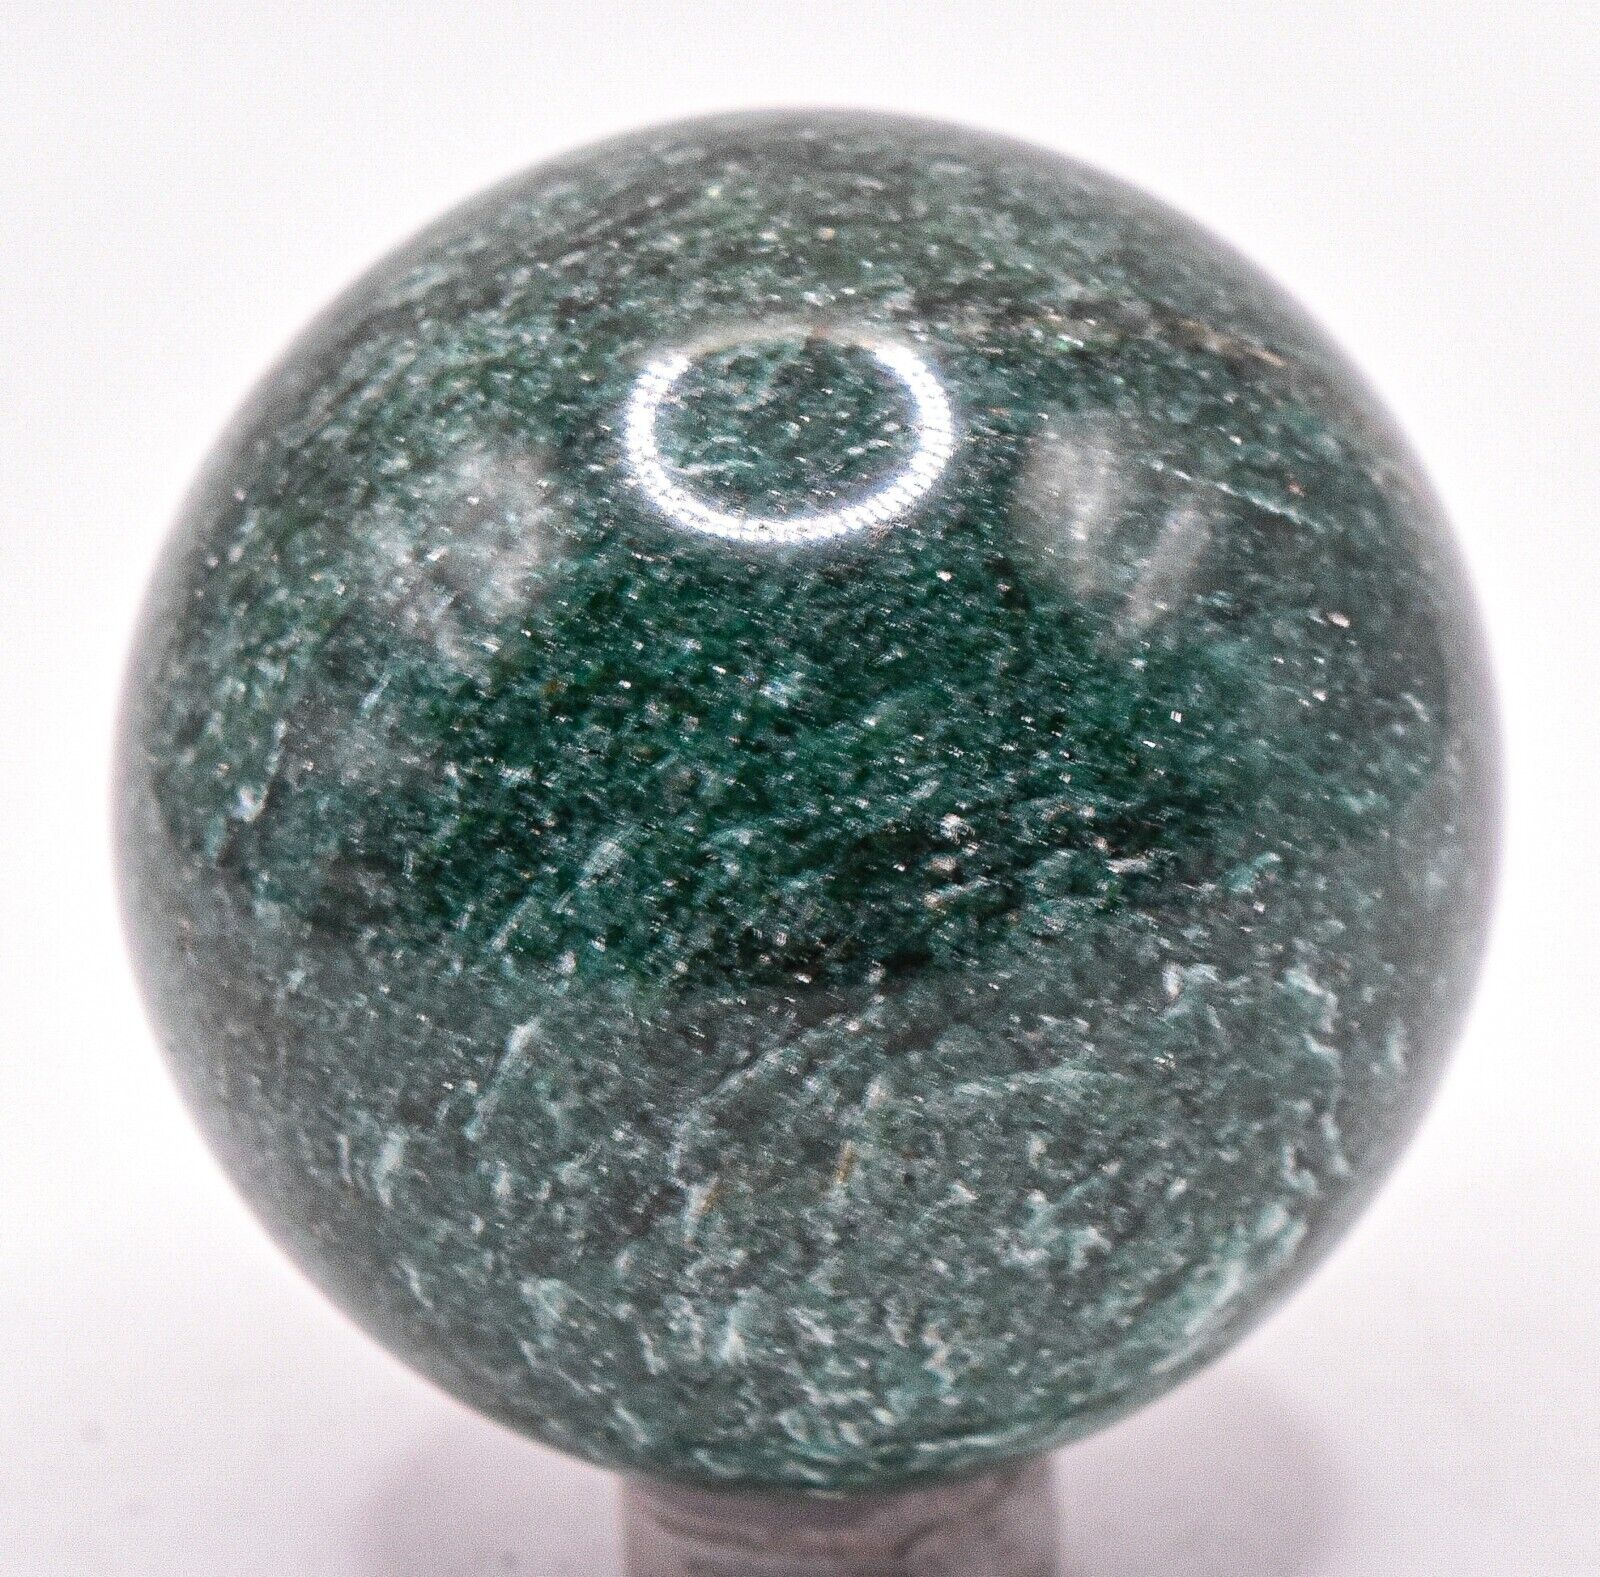 48mm 165g Green Jade Sphere Polished Natural Gemstone Crystal Mineral Ball India